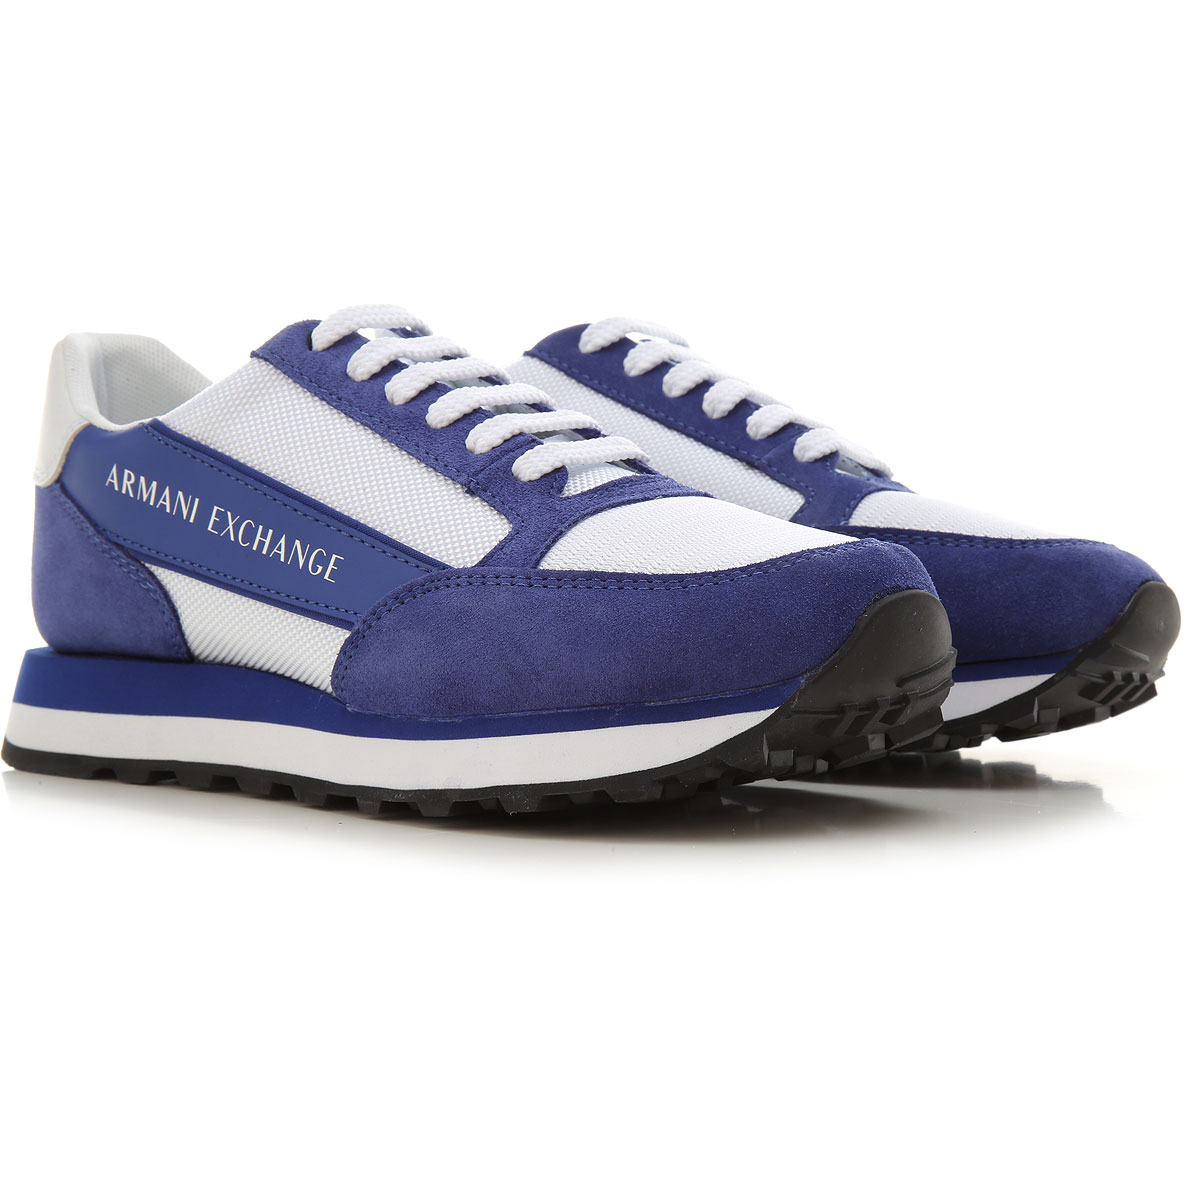 Chaussures Homme Armani Exchange, Code produit: xux083-xv263-k560